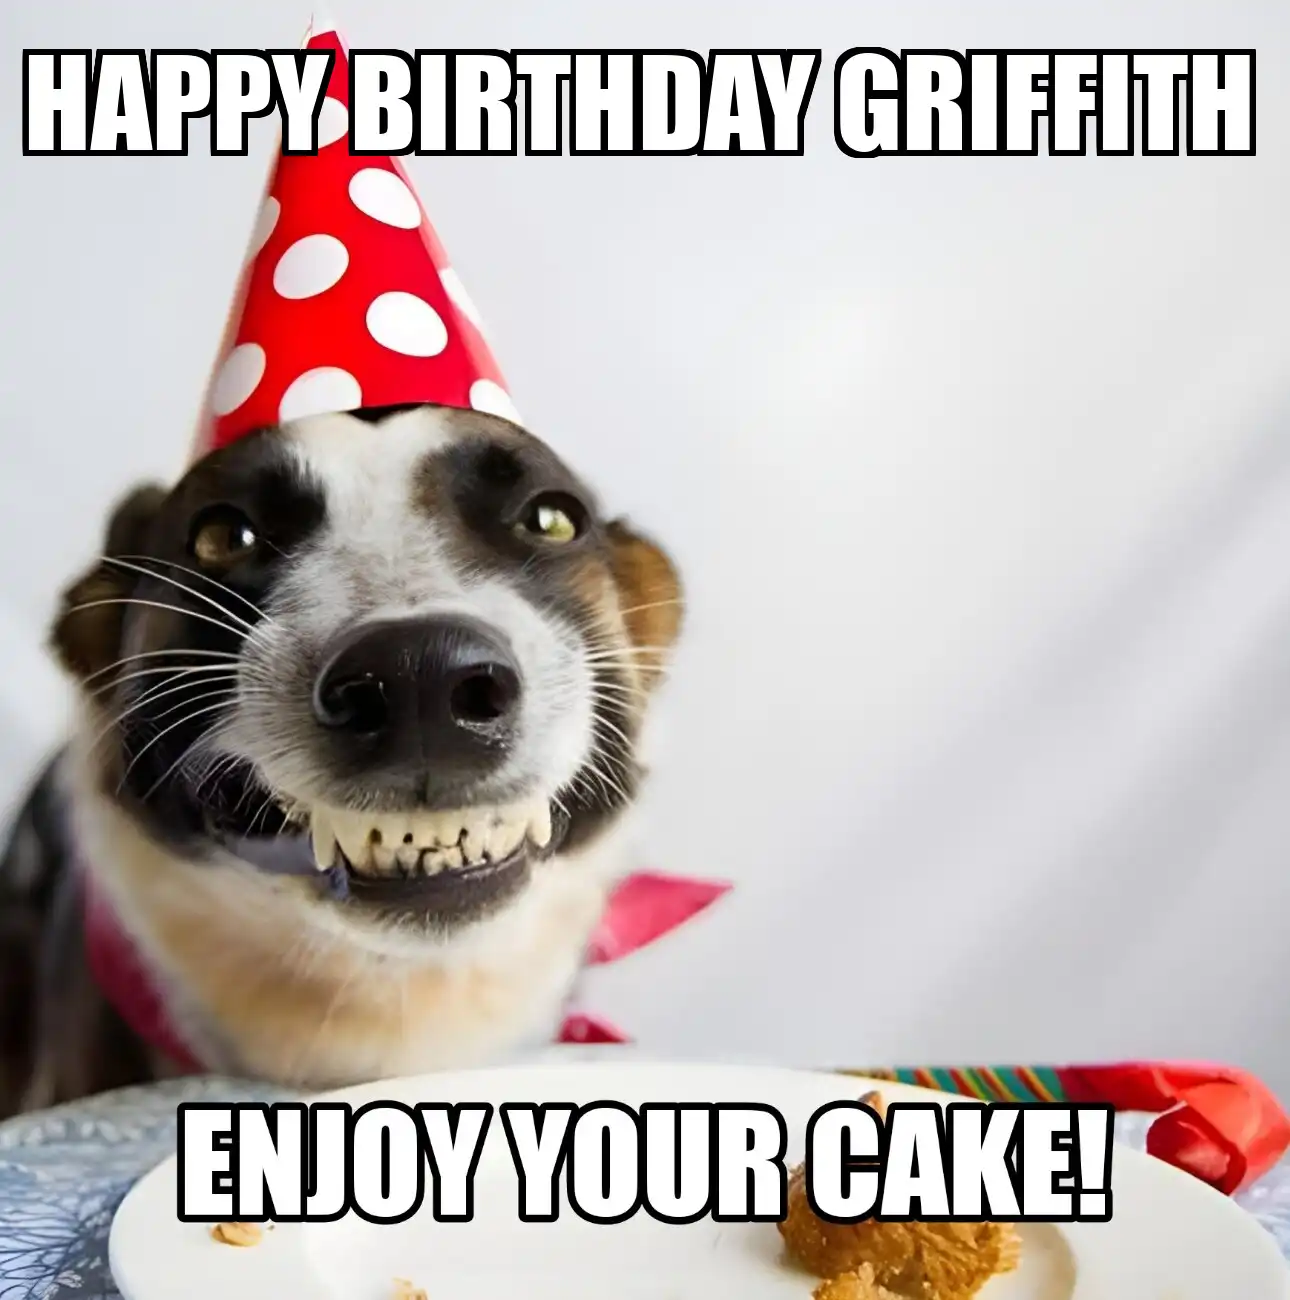 Happy Birthday Griffith Enjoy Your Cake Dog Meme